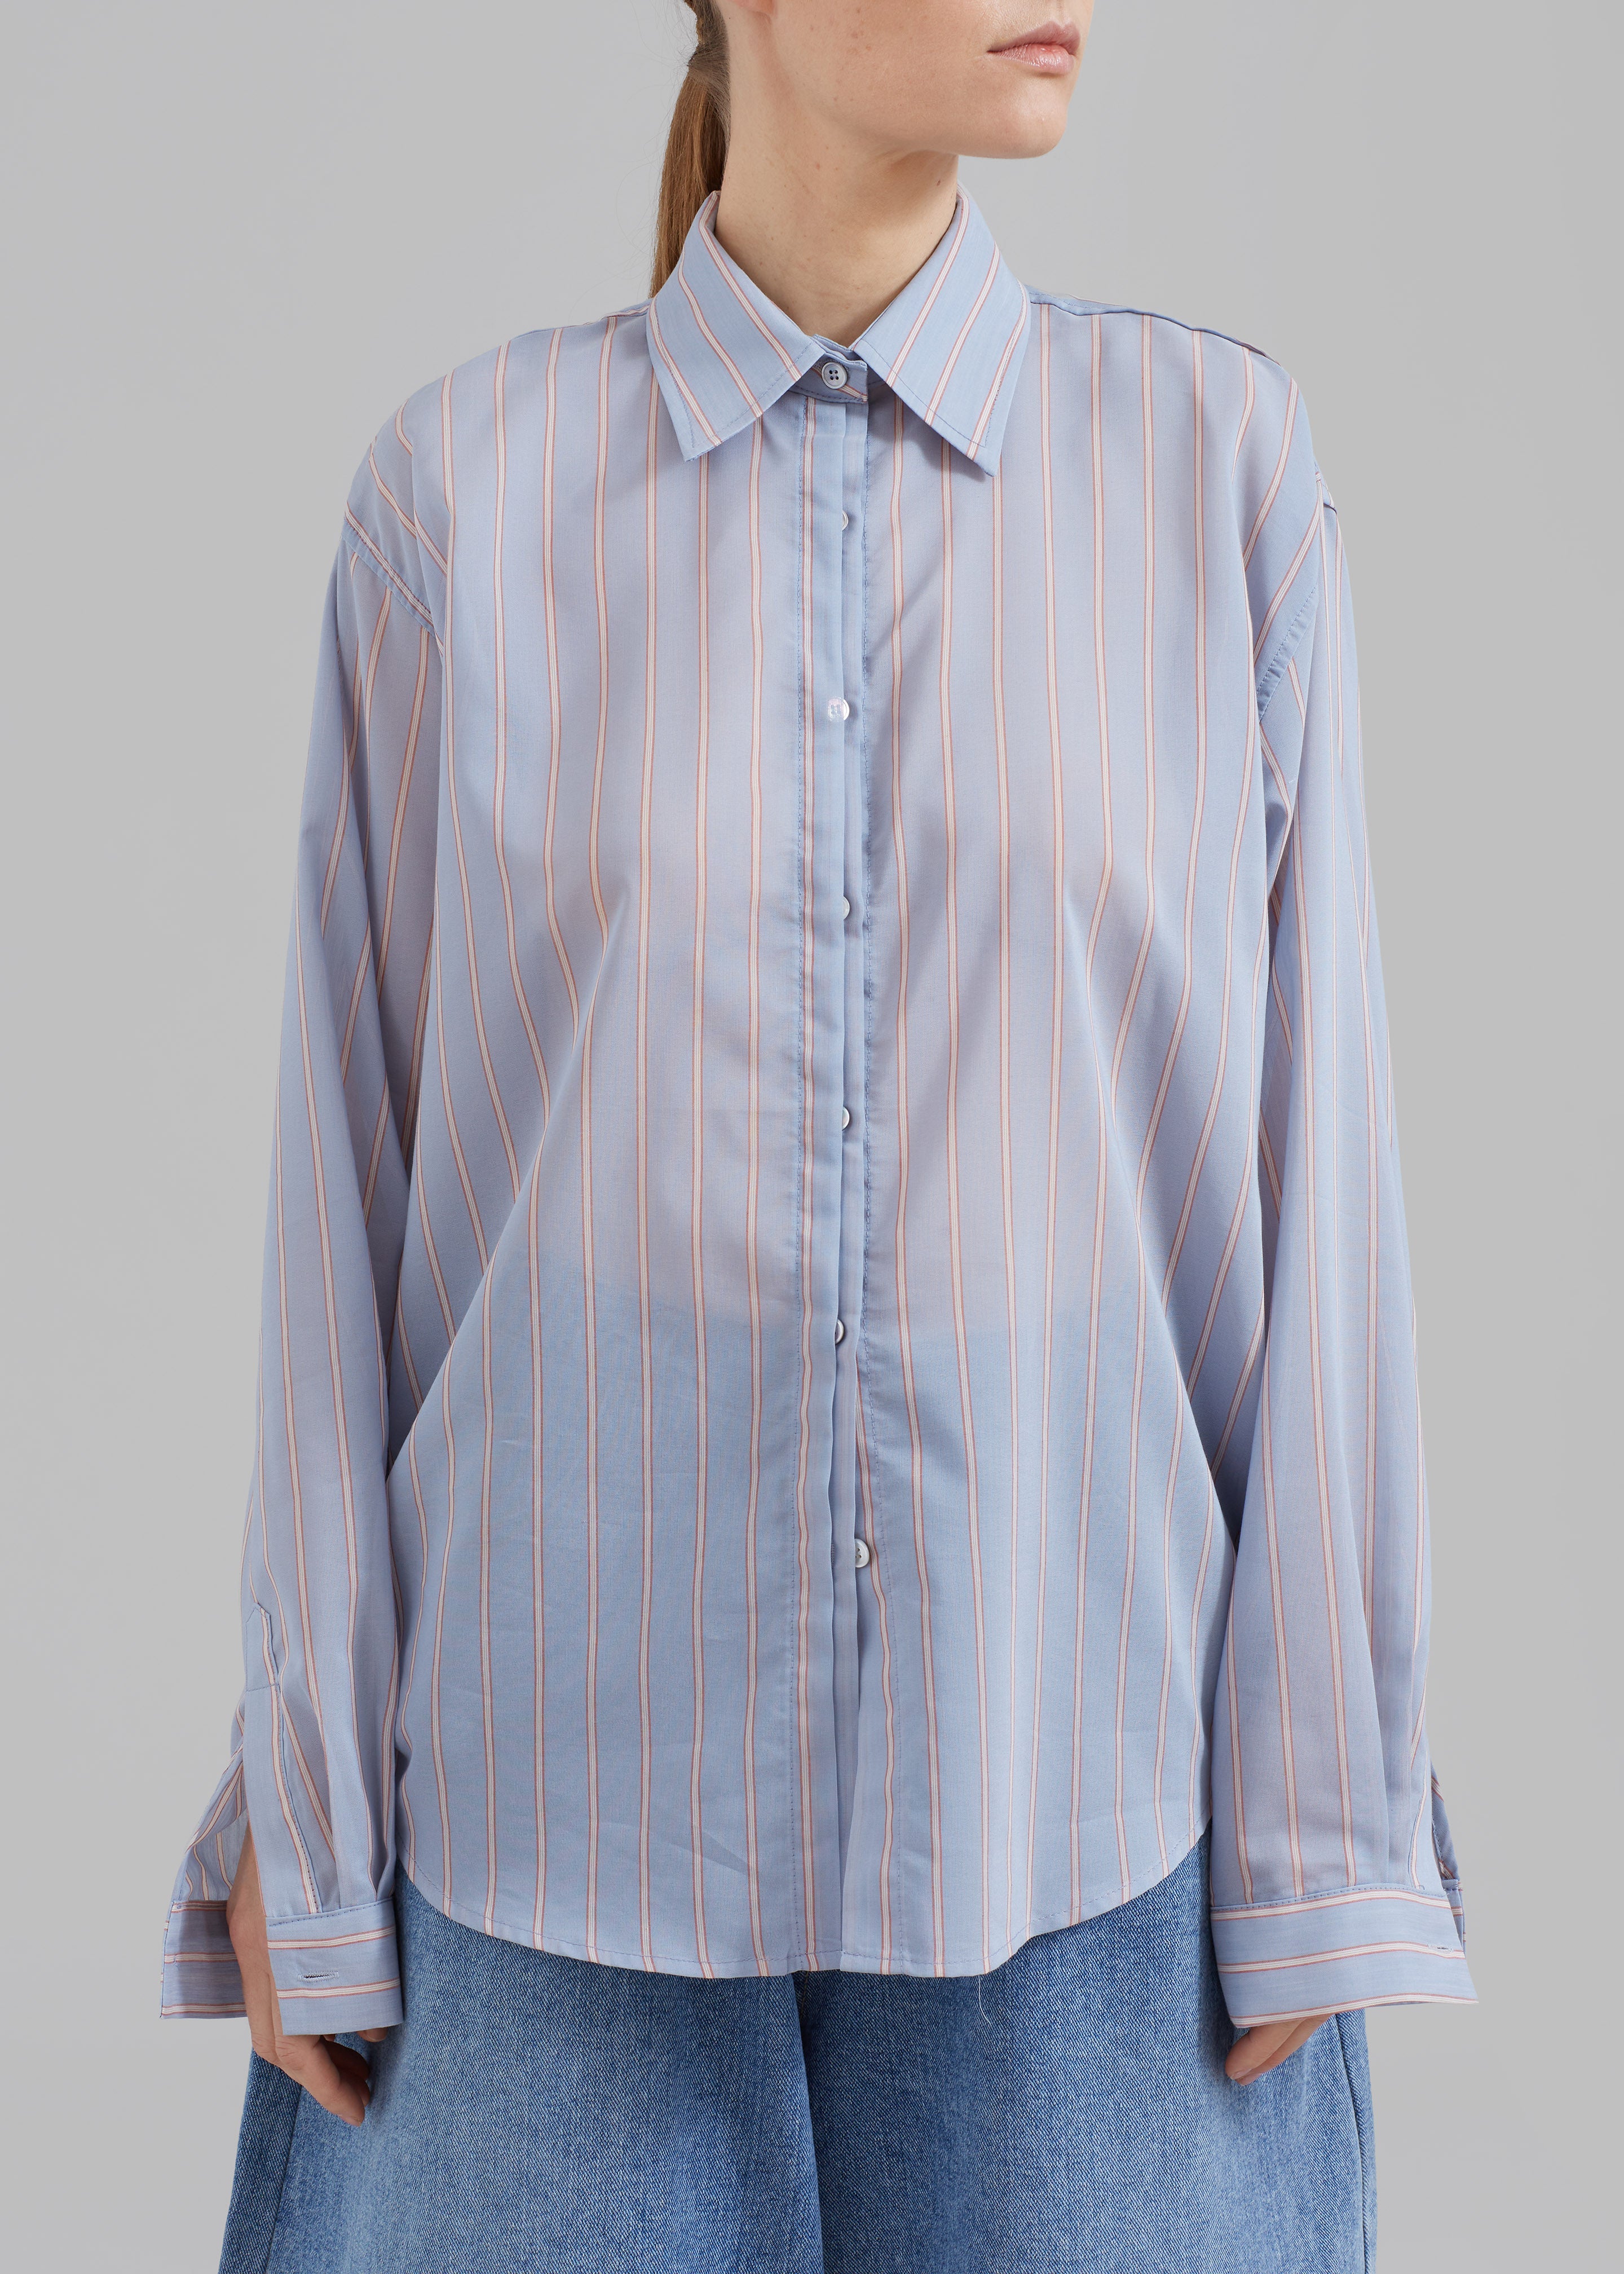 Florence Stripe Shirt - Blue Combo - 3